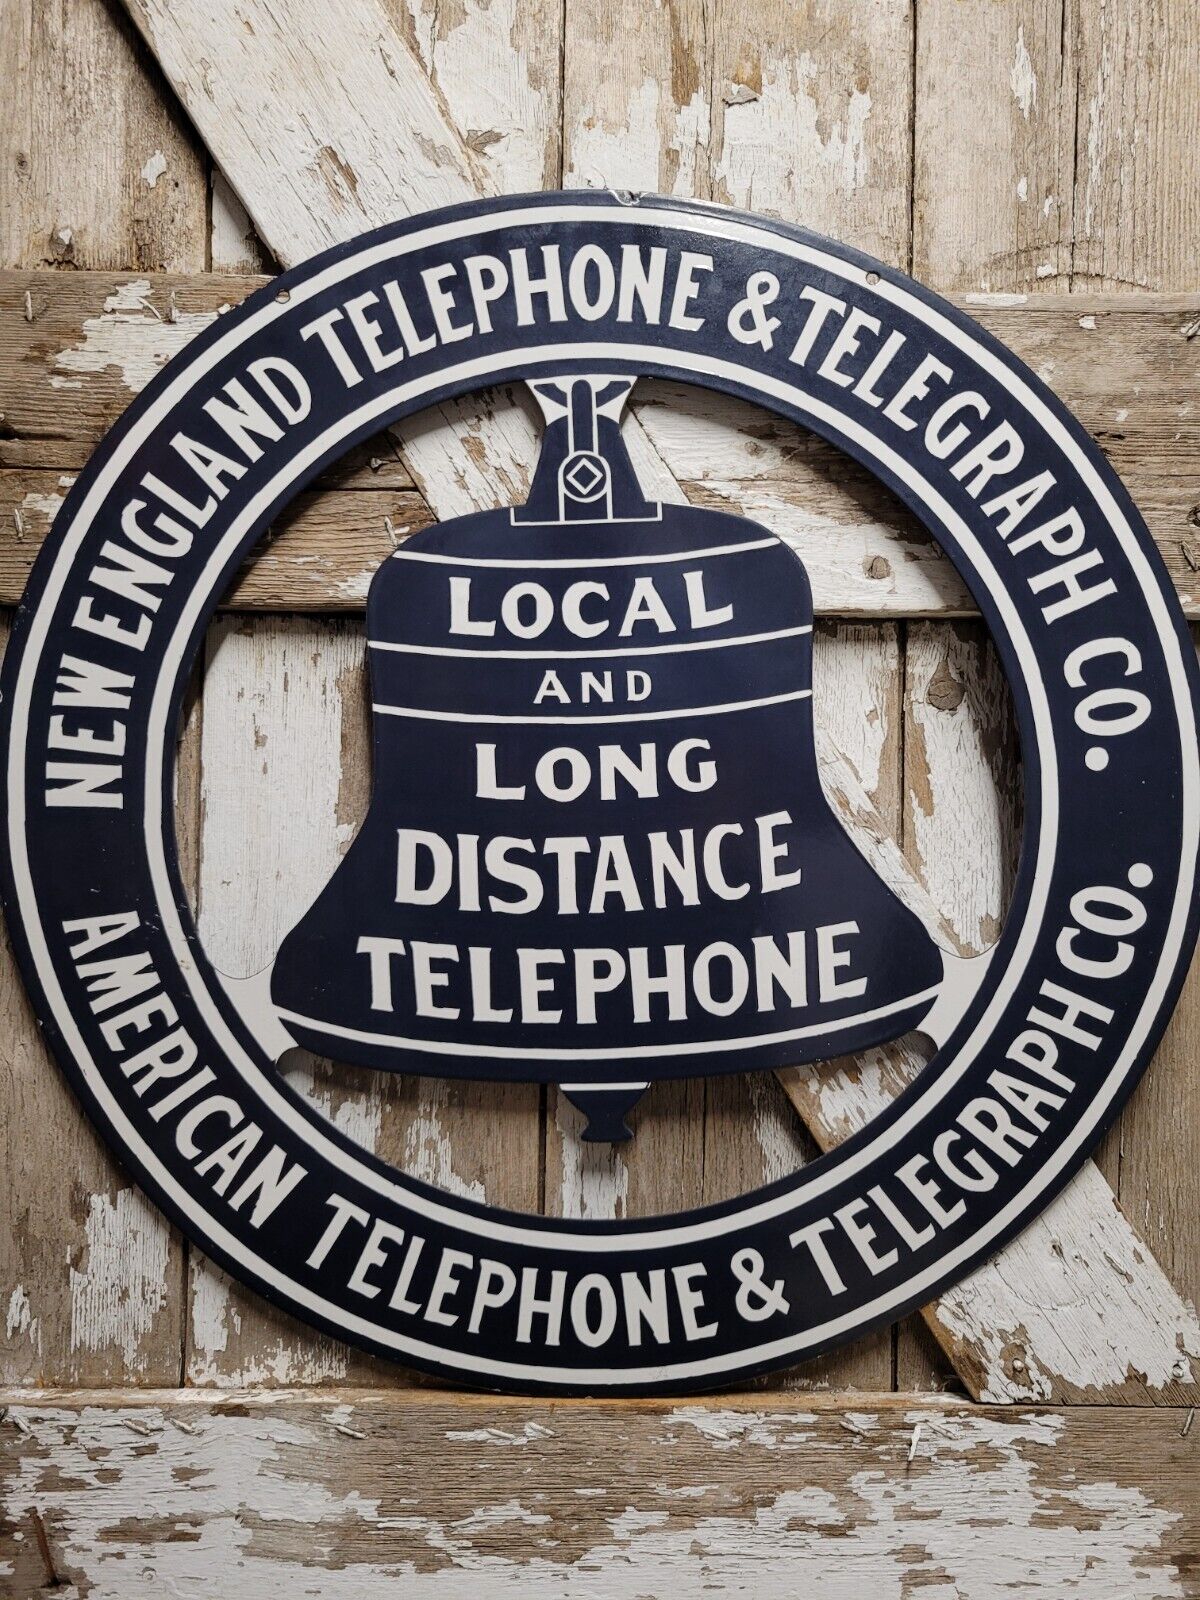 RARE VINTAGE NEW ENGLAND TELEPHONE PORCELAIN SIGN AMERICAN TELEGRAPH PHONE CO.